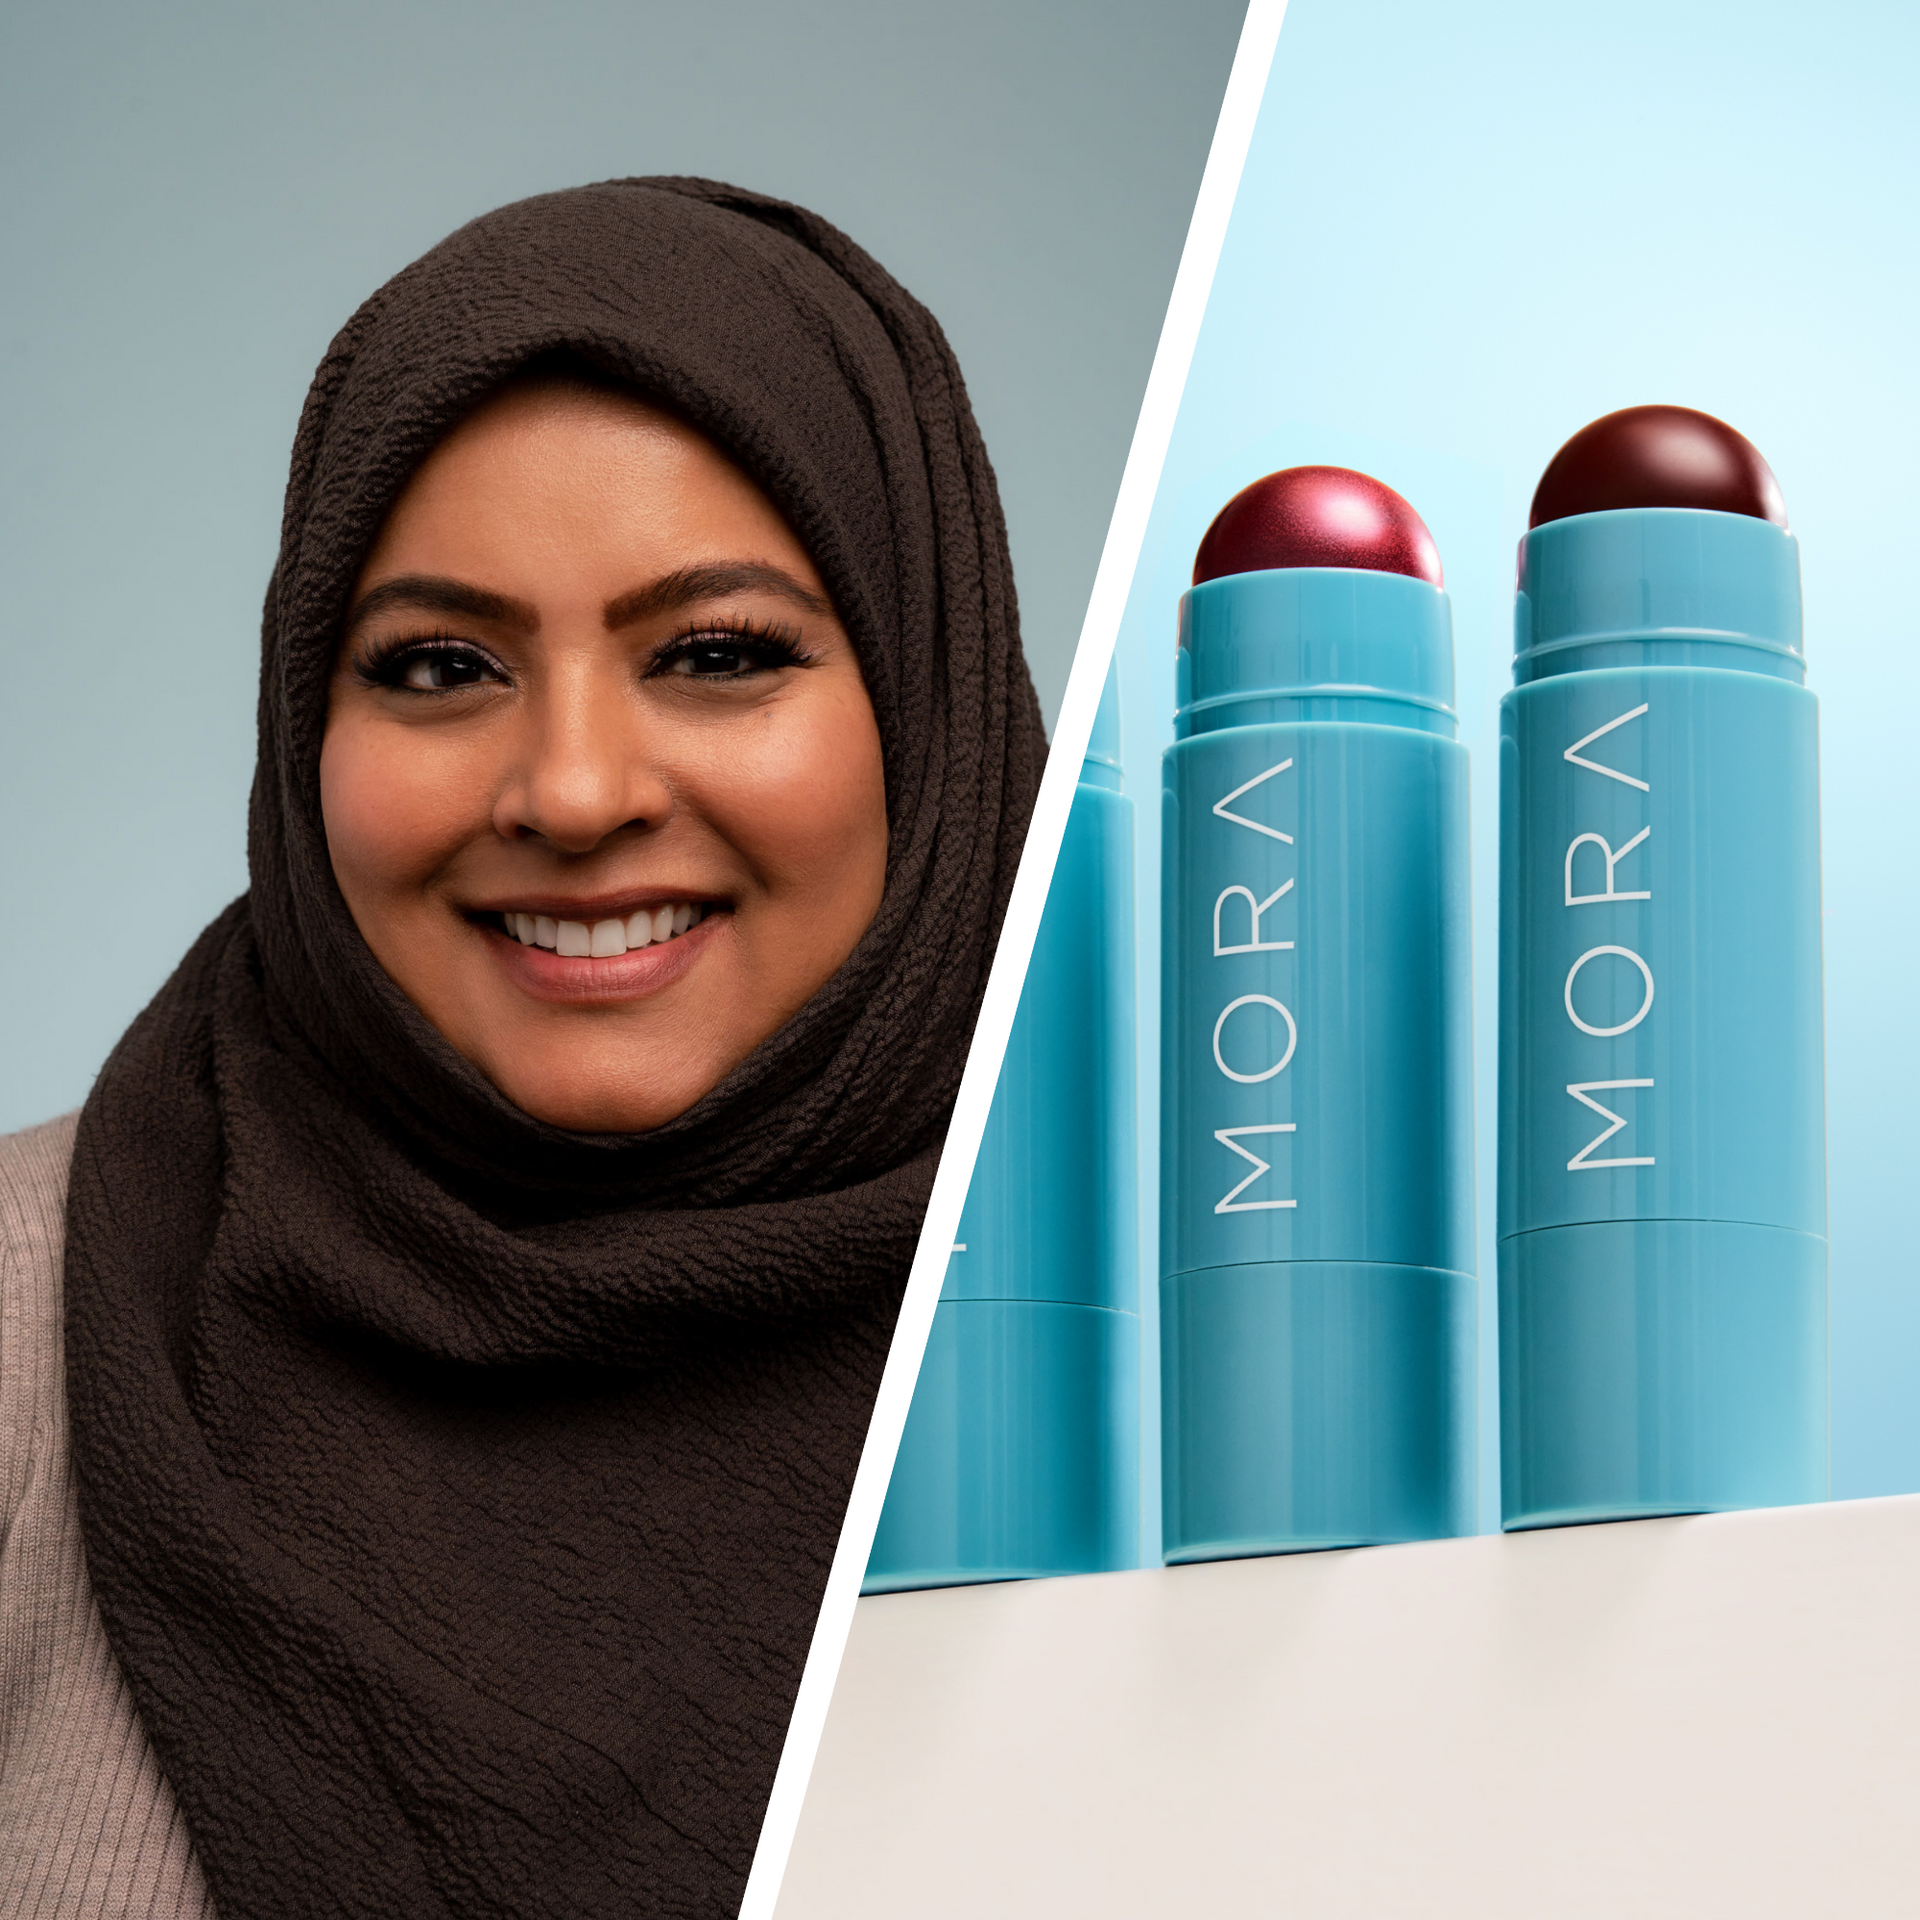 Minara El-Rahman with Mora Cosmetics products, highlighting halal certification